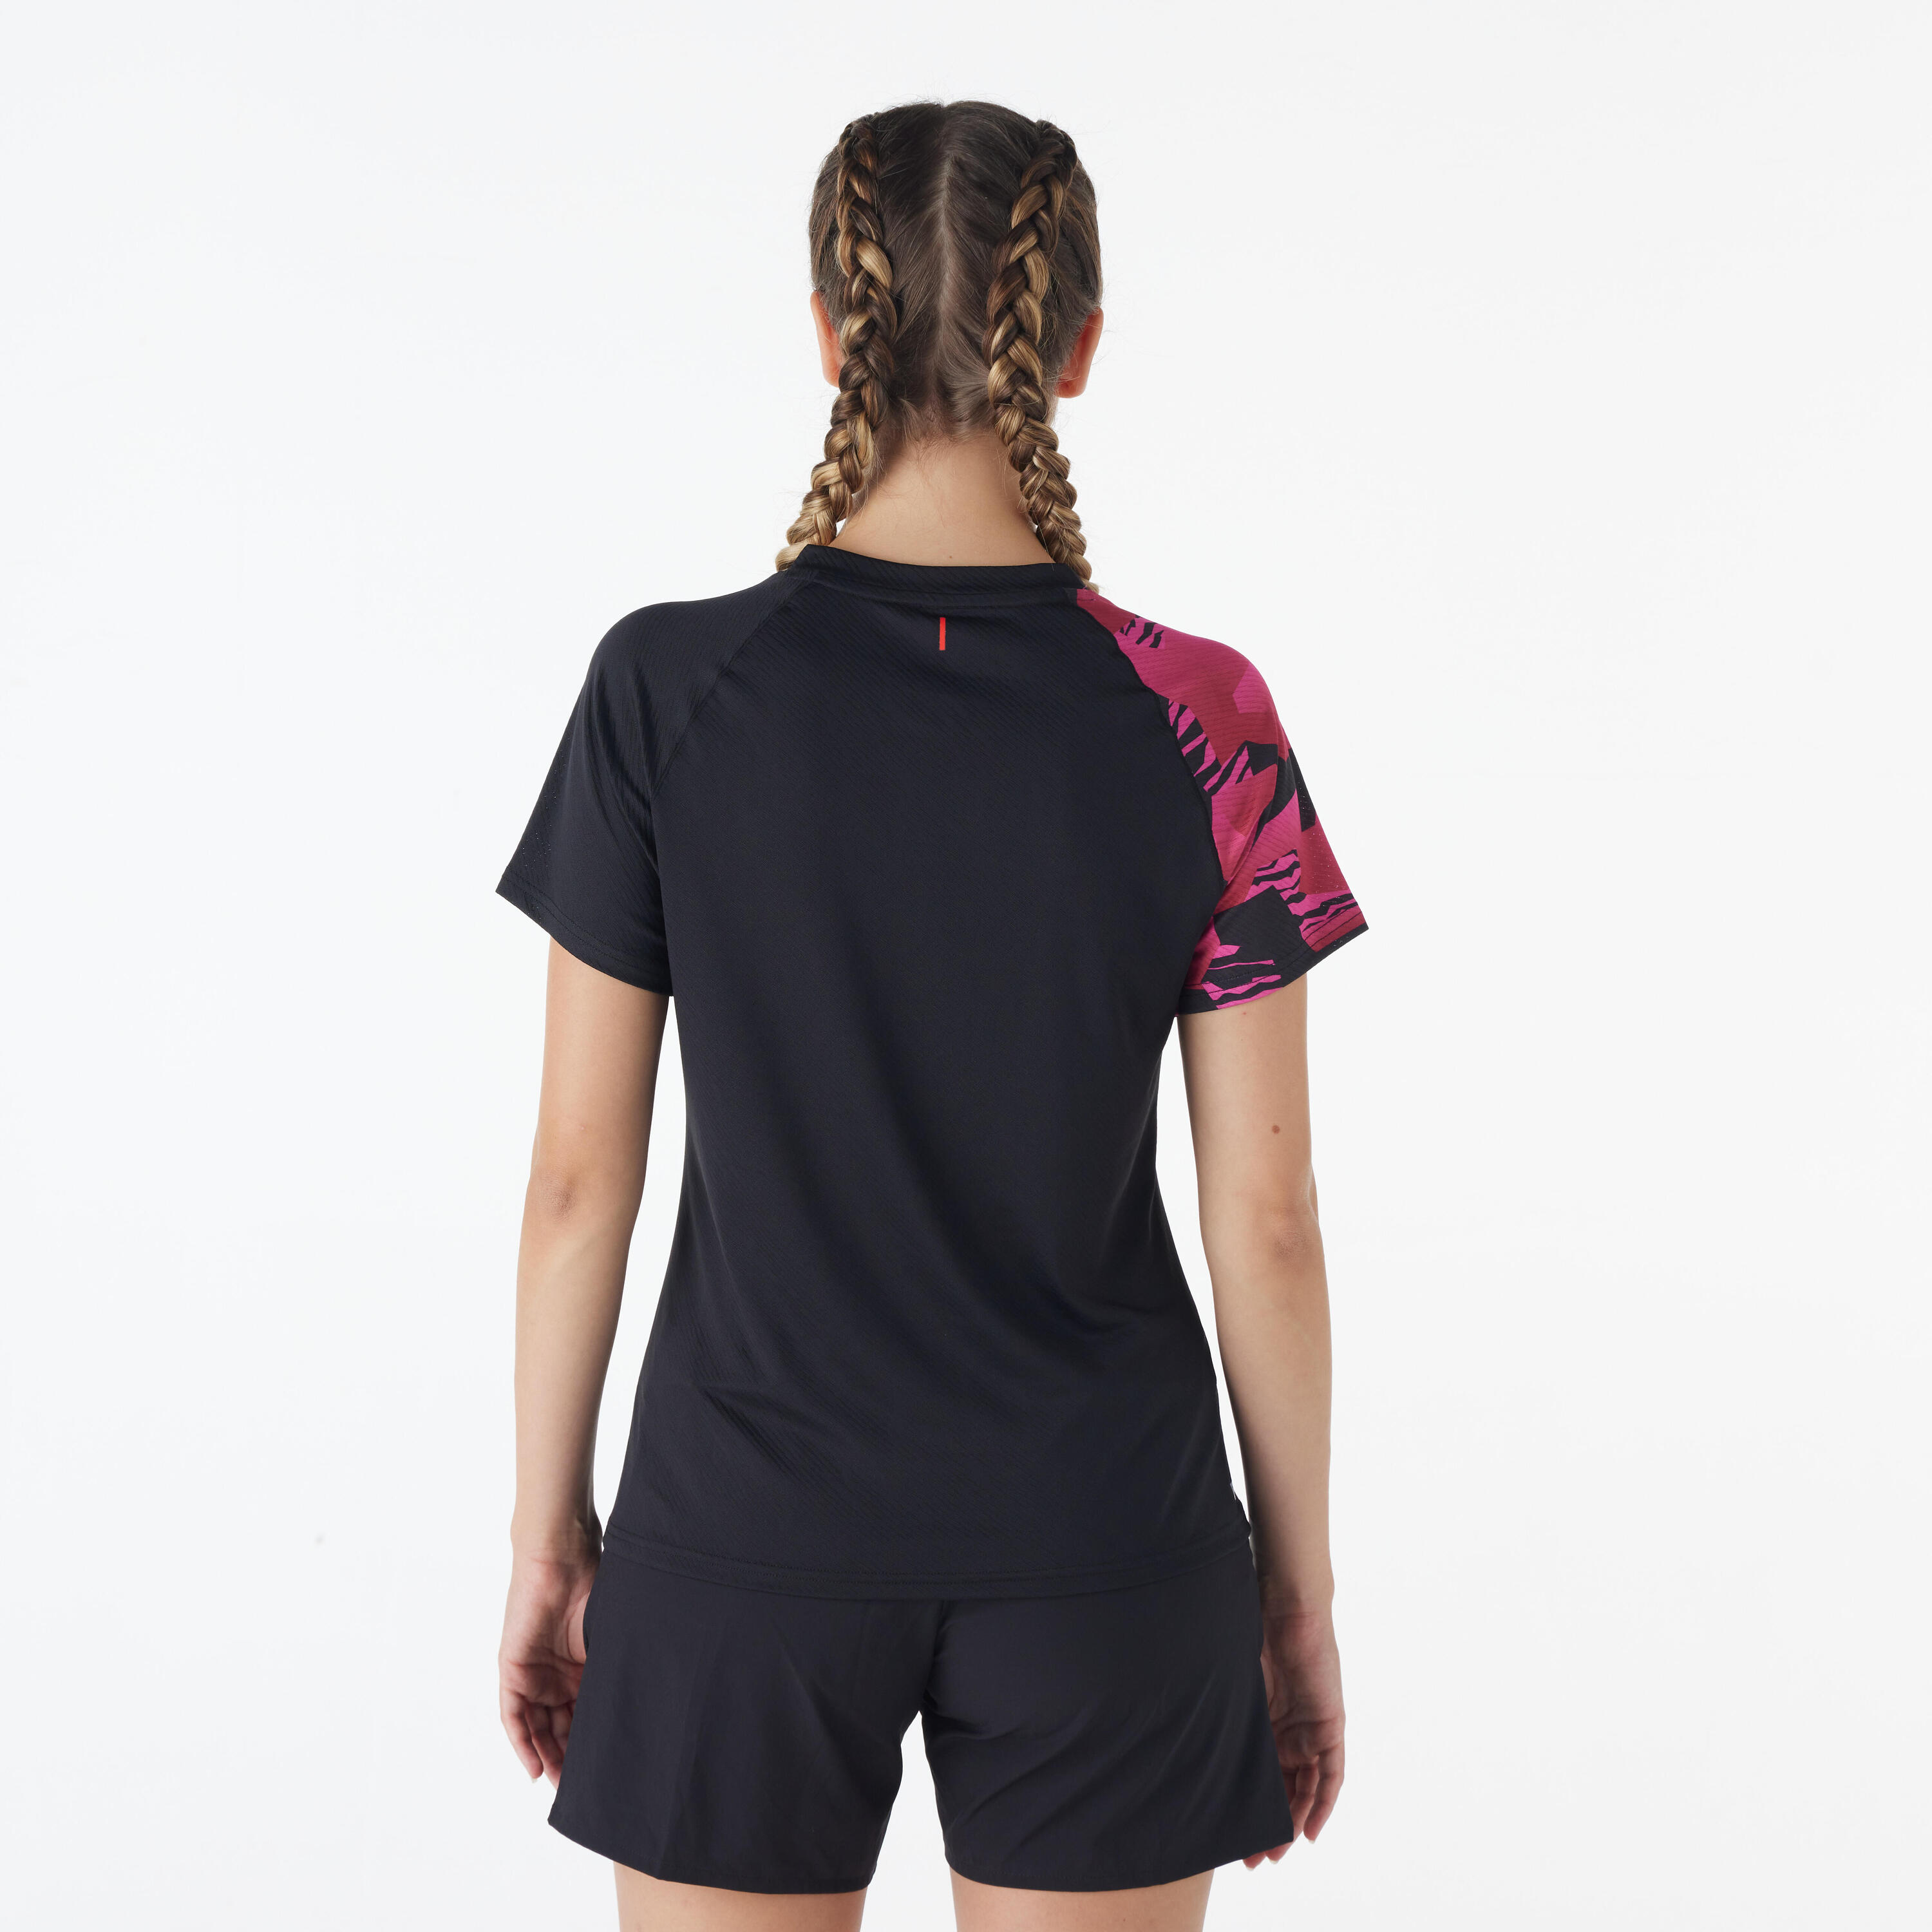 LITE Badminton T-shirt 560 Women Black Fluo 5/5